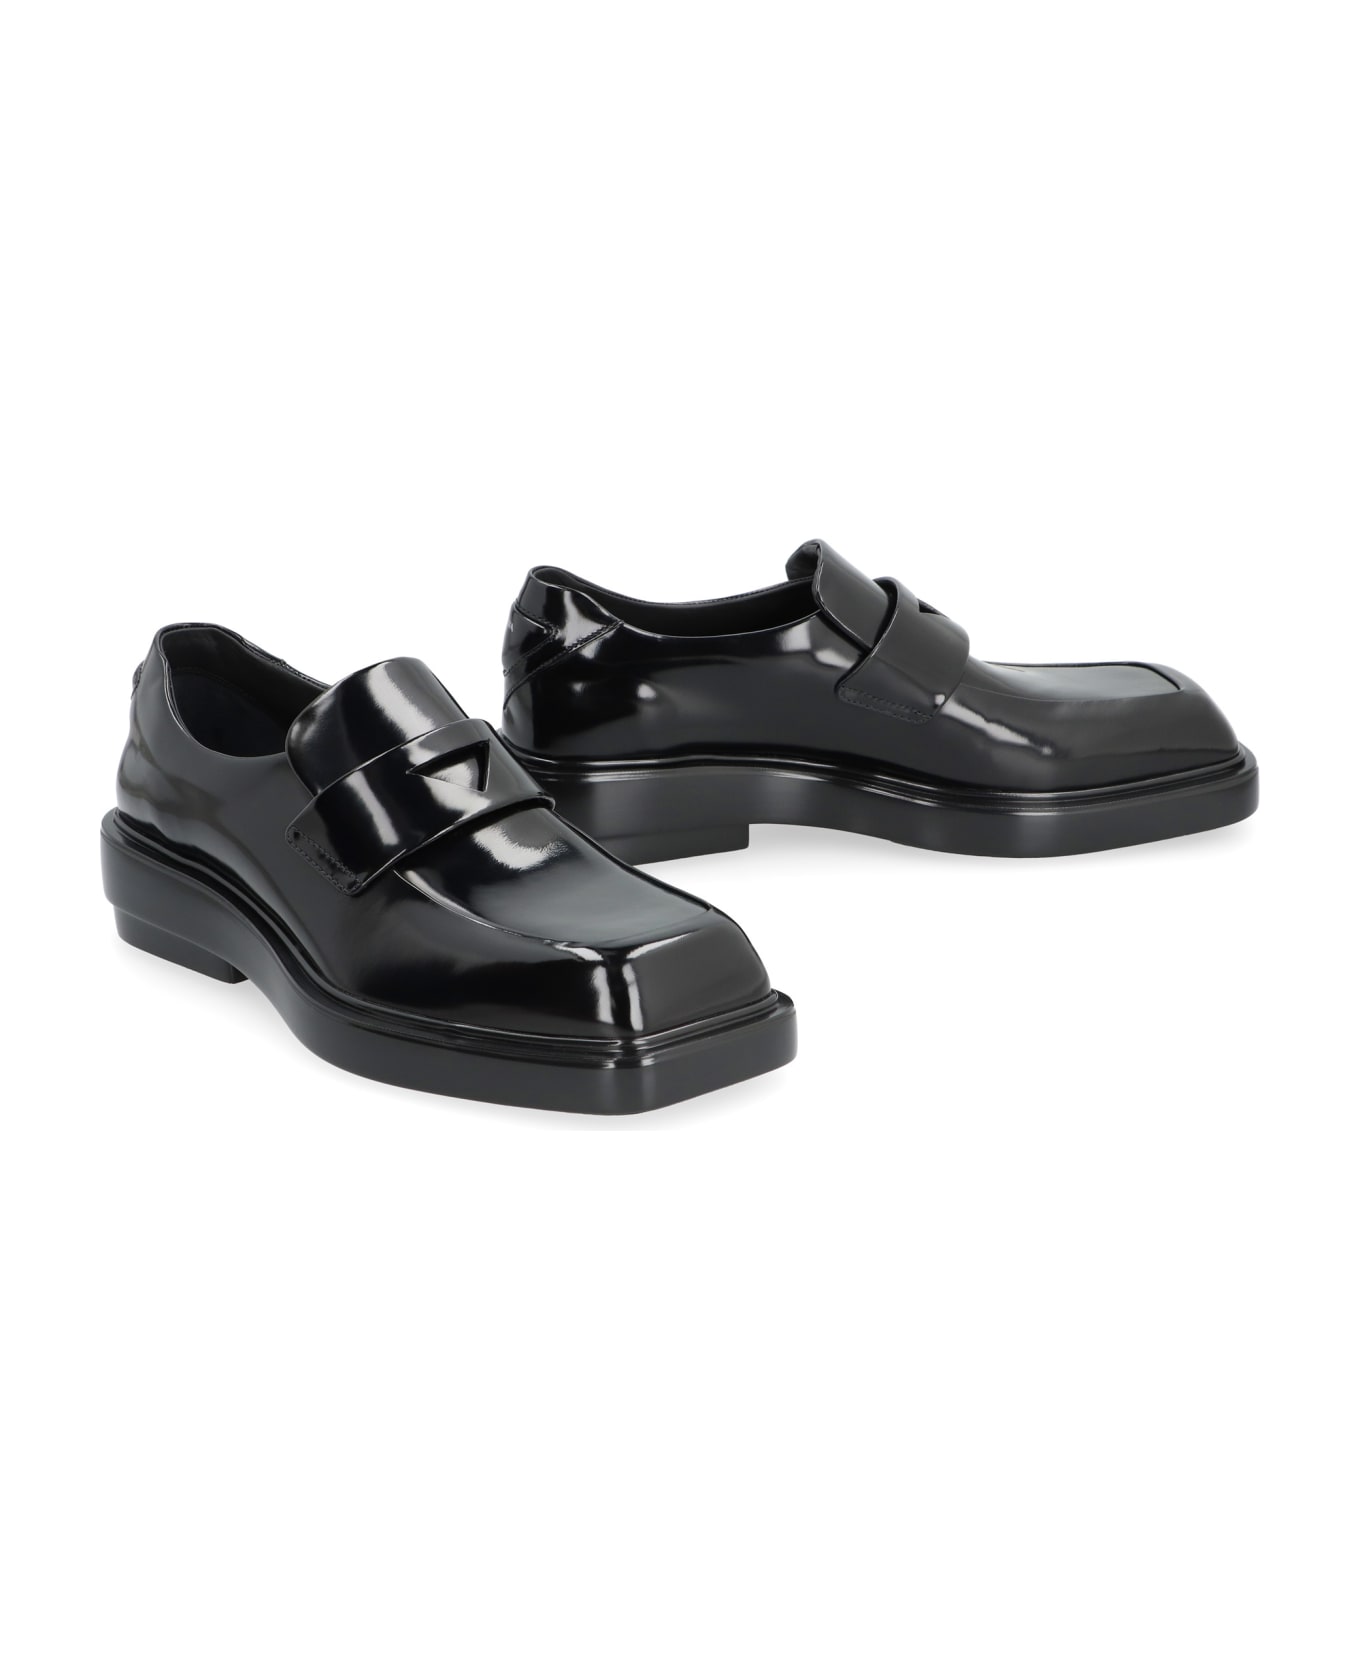 Prada Leather Loafers - black フラットシューズ